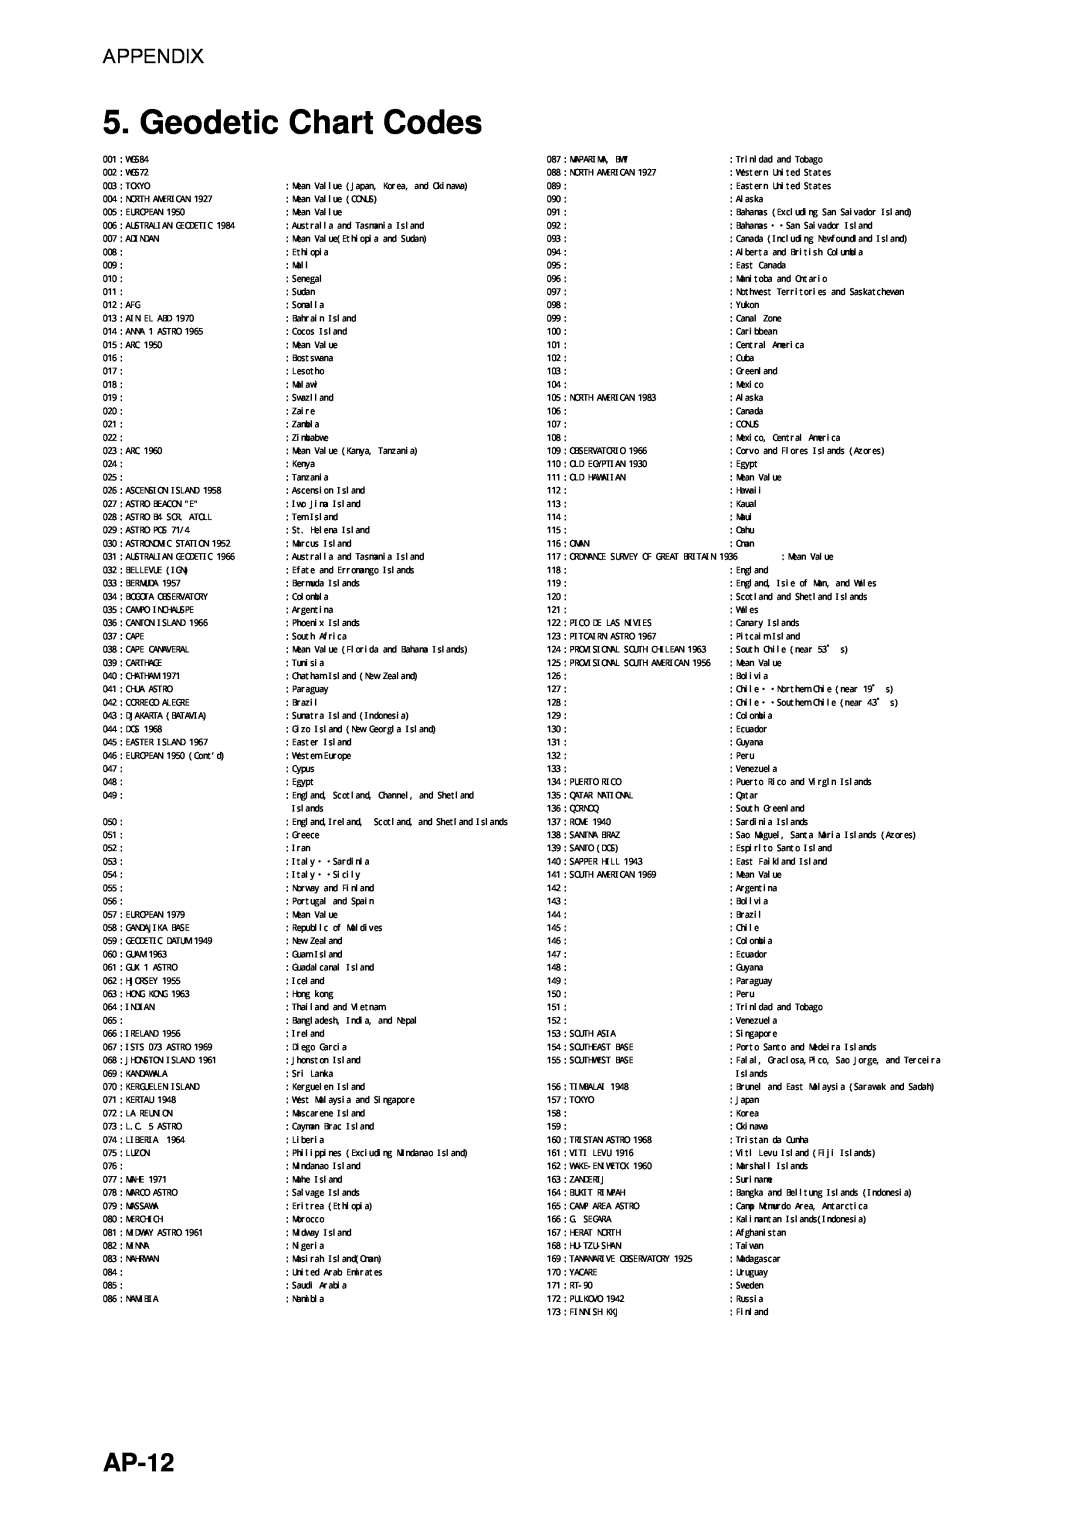 Furuno SC-110 manual Geodetic Chart Codes, AP-12 